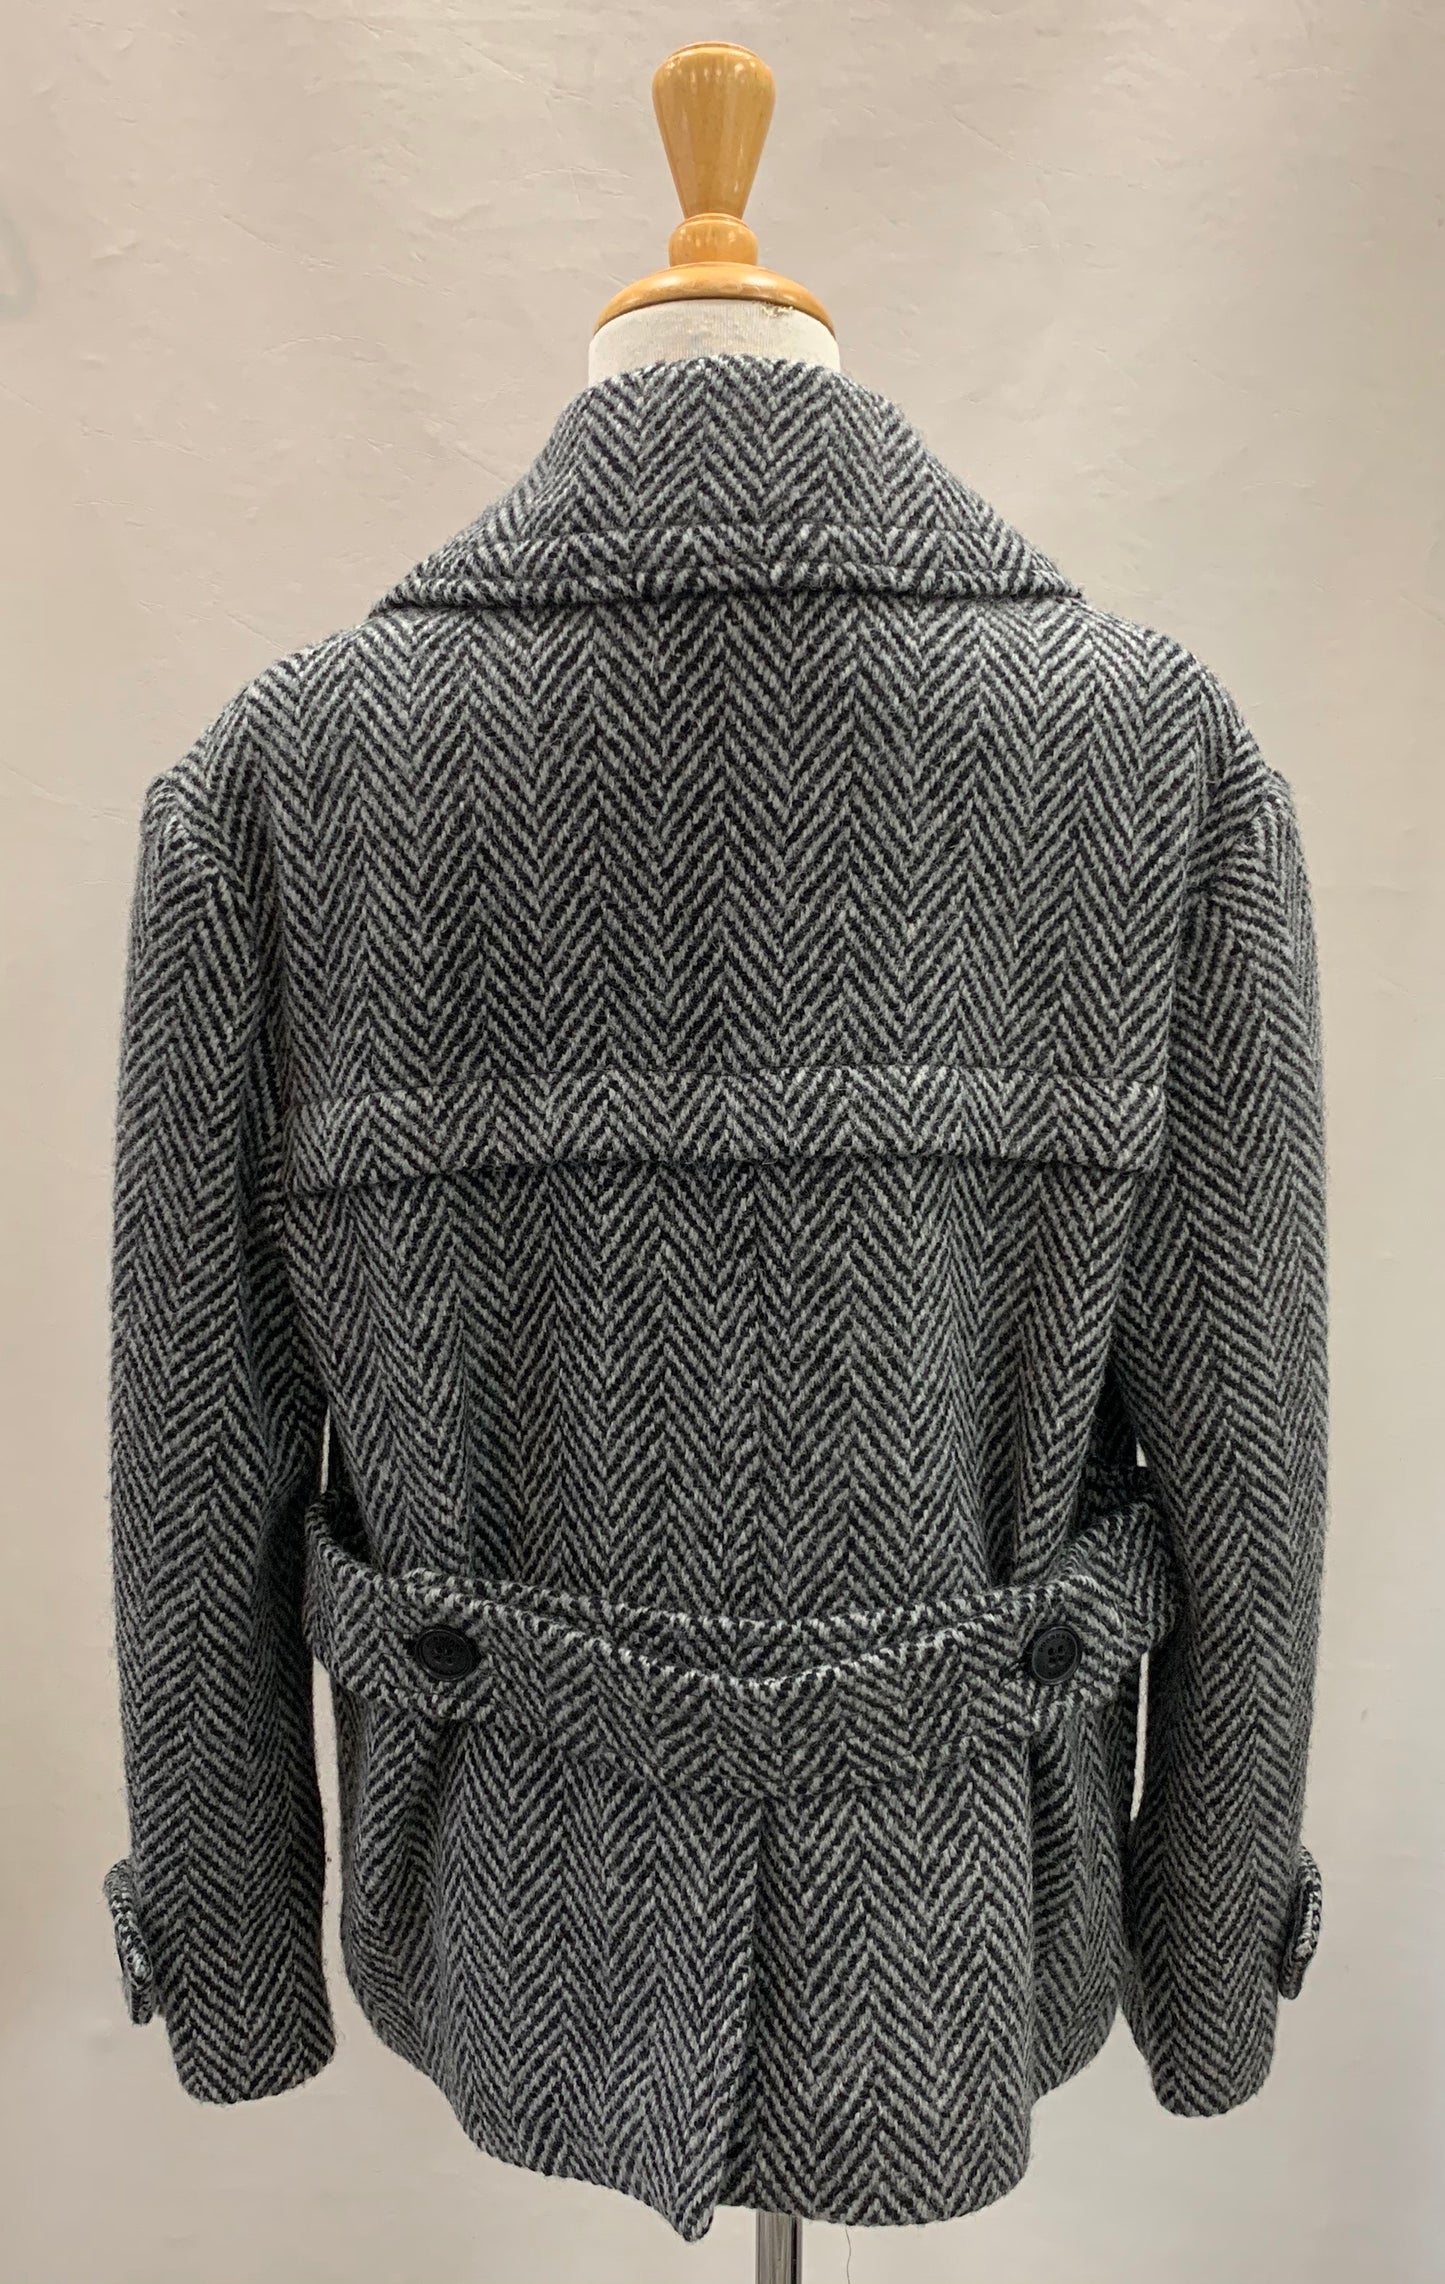 Authentic Burberry Brit Wool Herringbone Jacket Sz XL